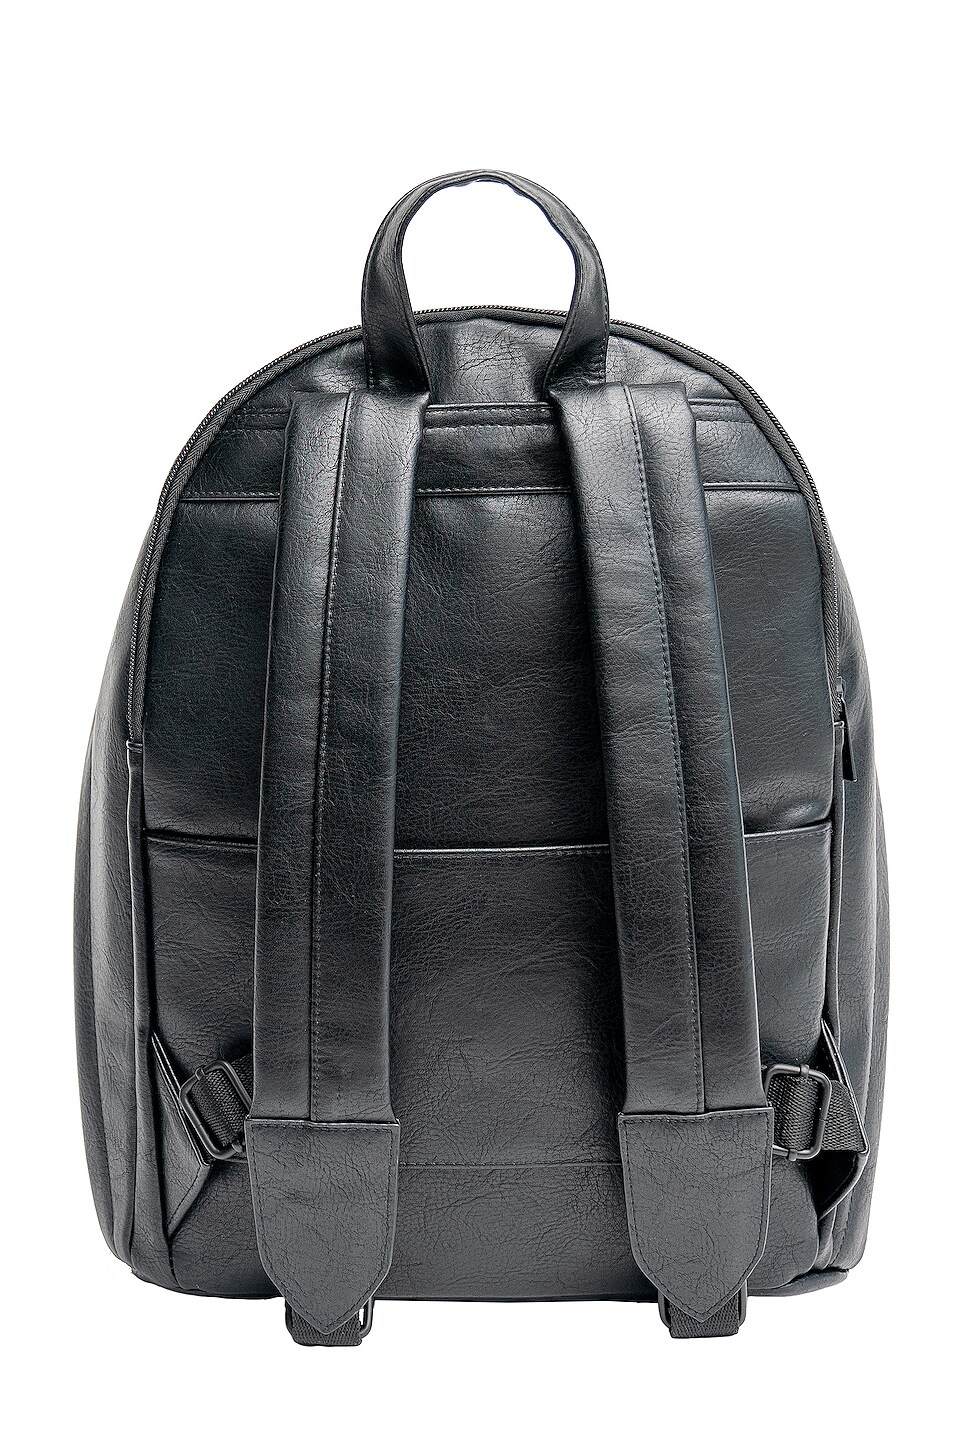 BEIS The Multi-Function Backpack in Black | REVOLVE